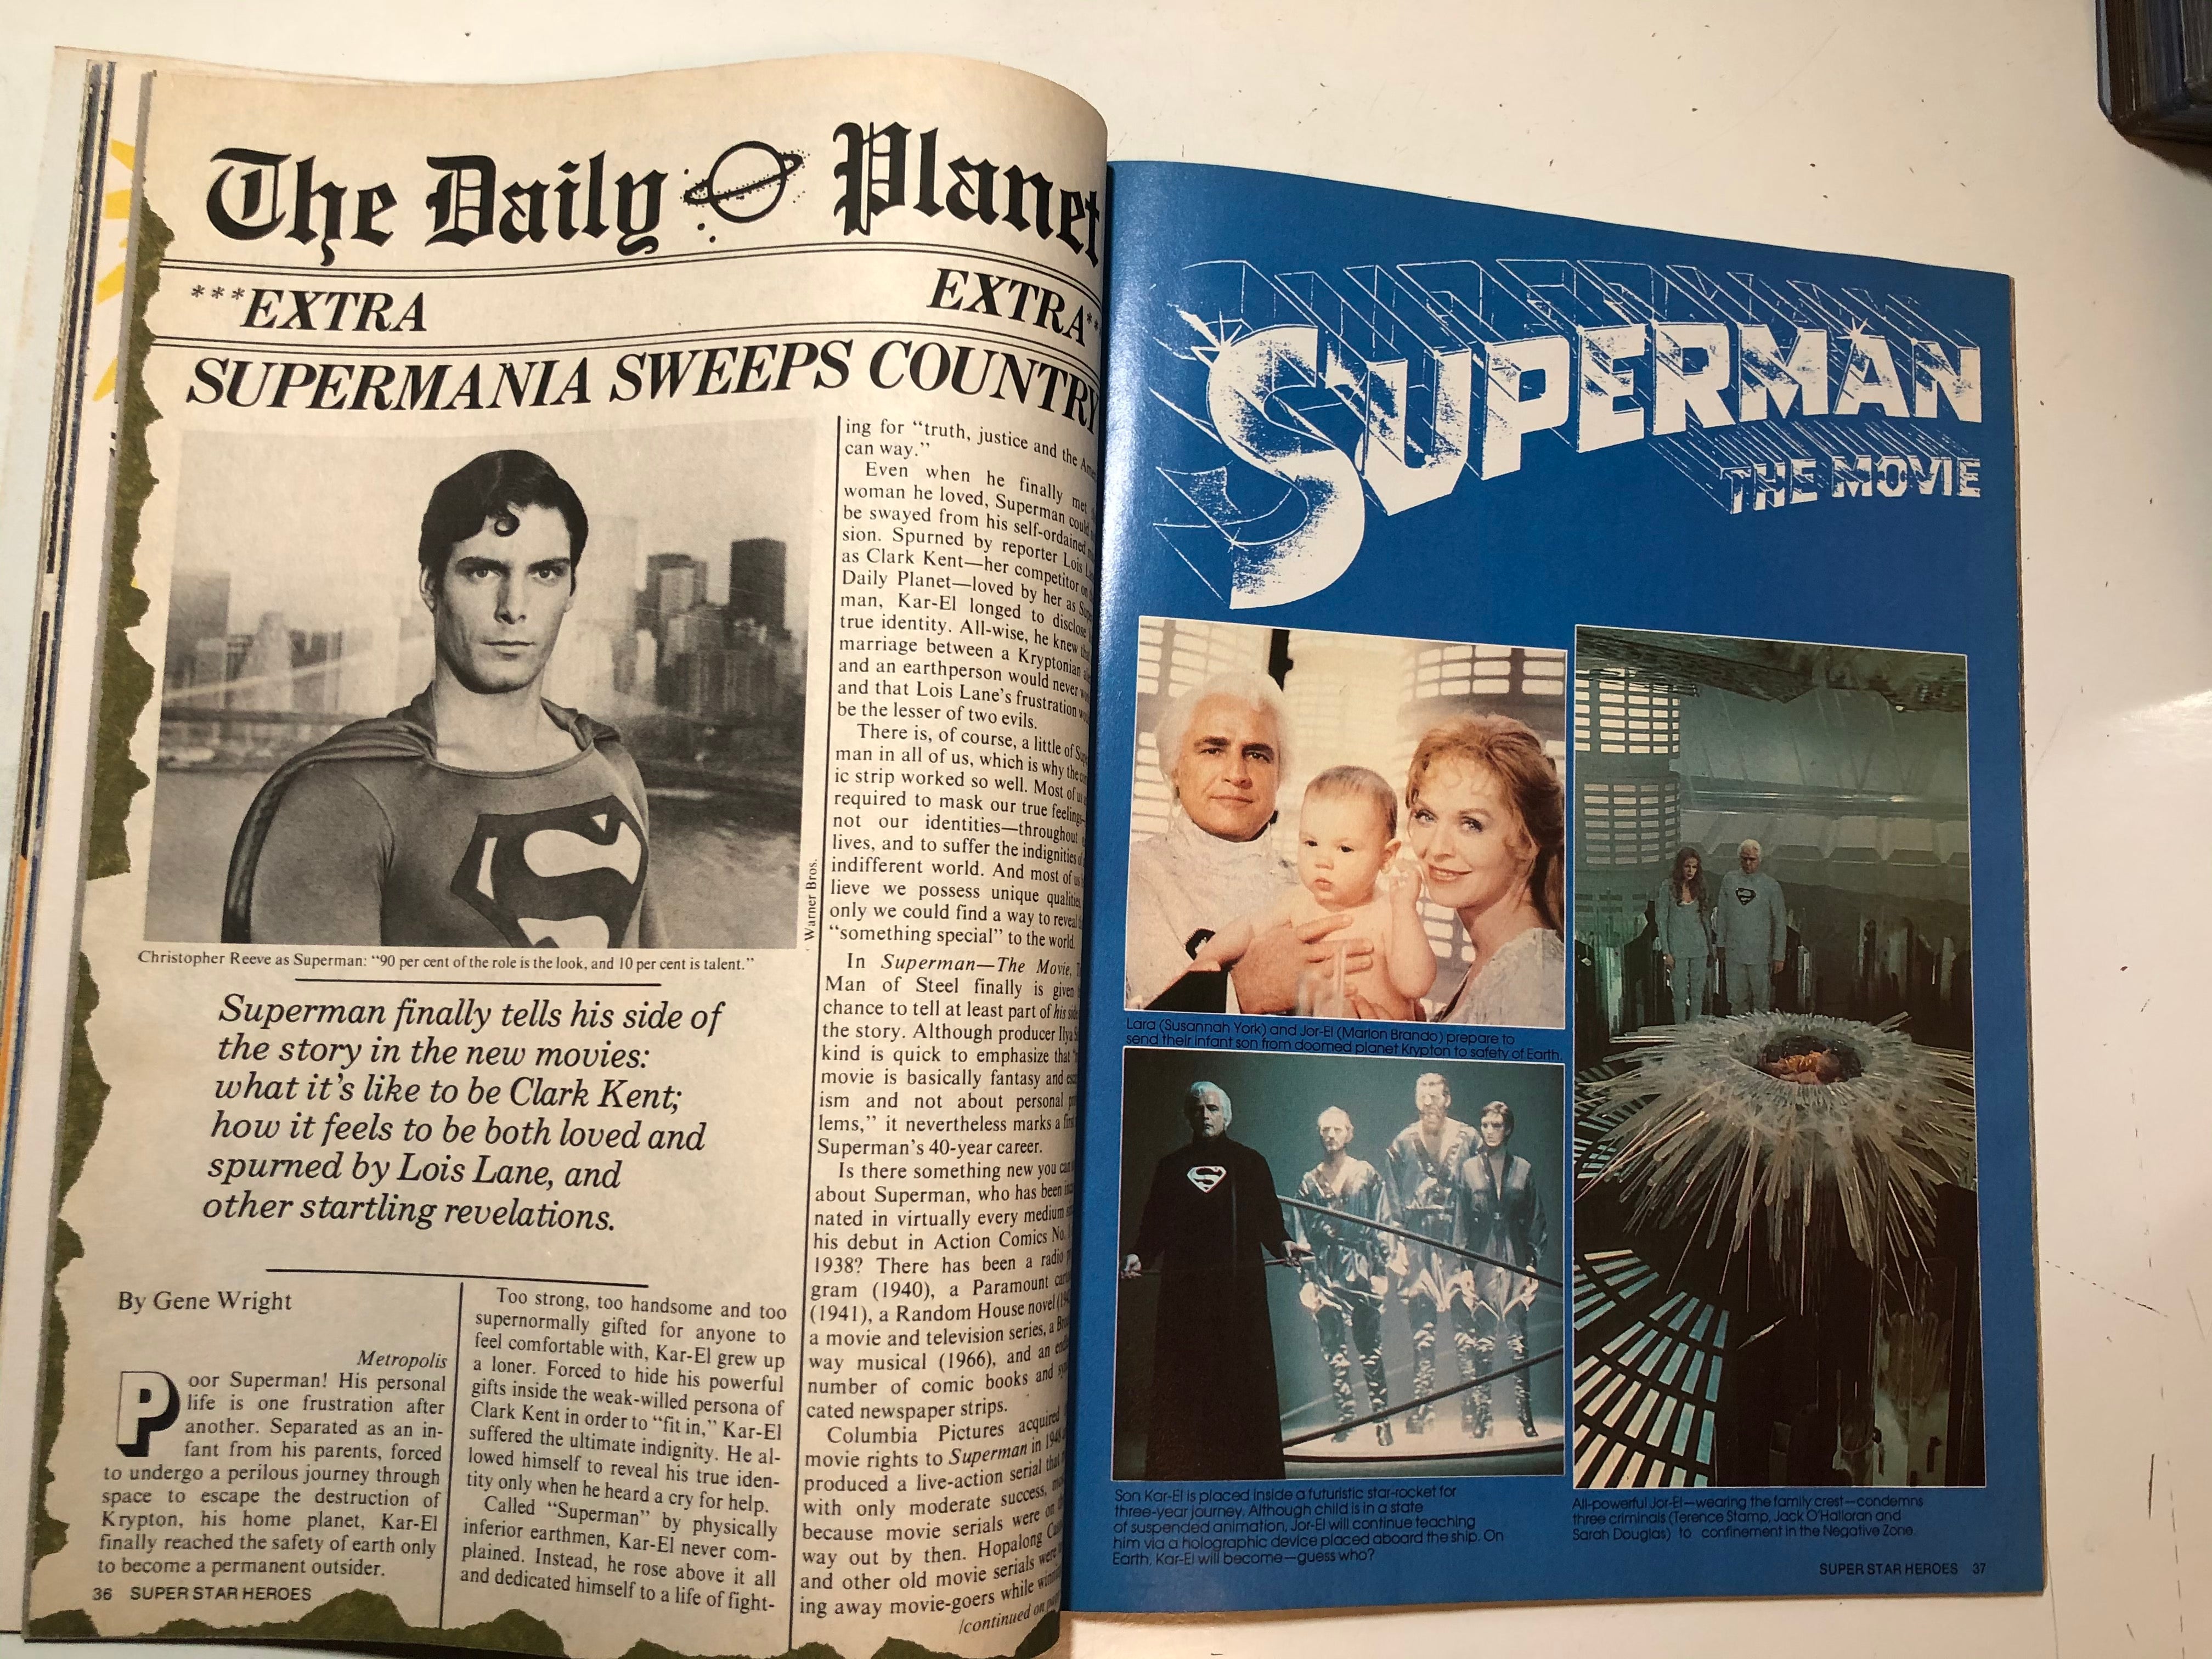 Super Star Heroes vintage scifi movie magazine 1978